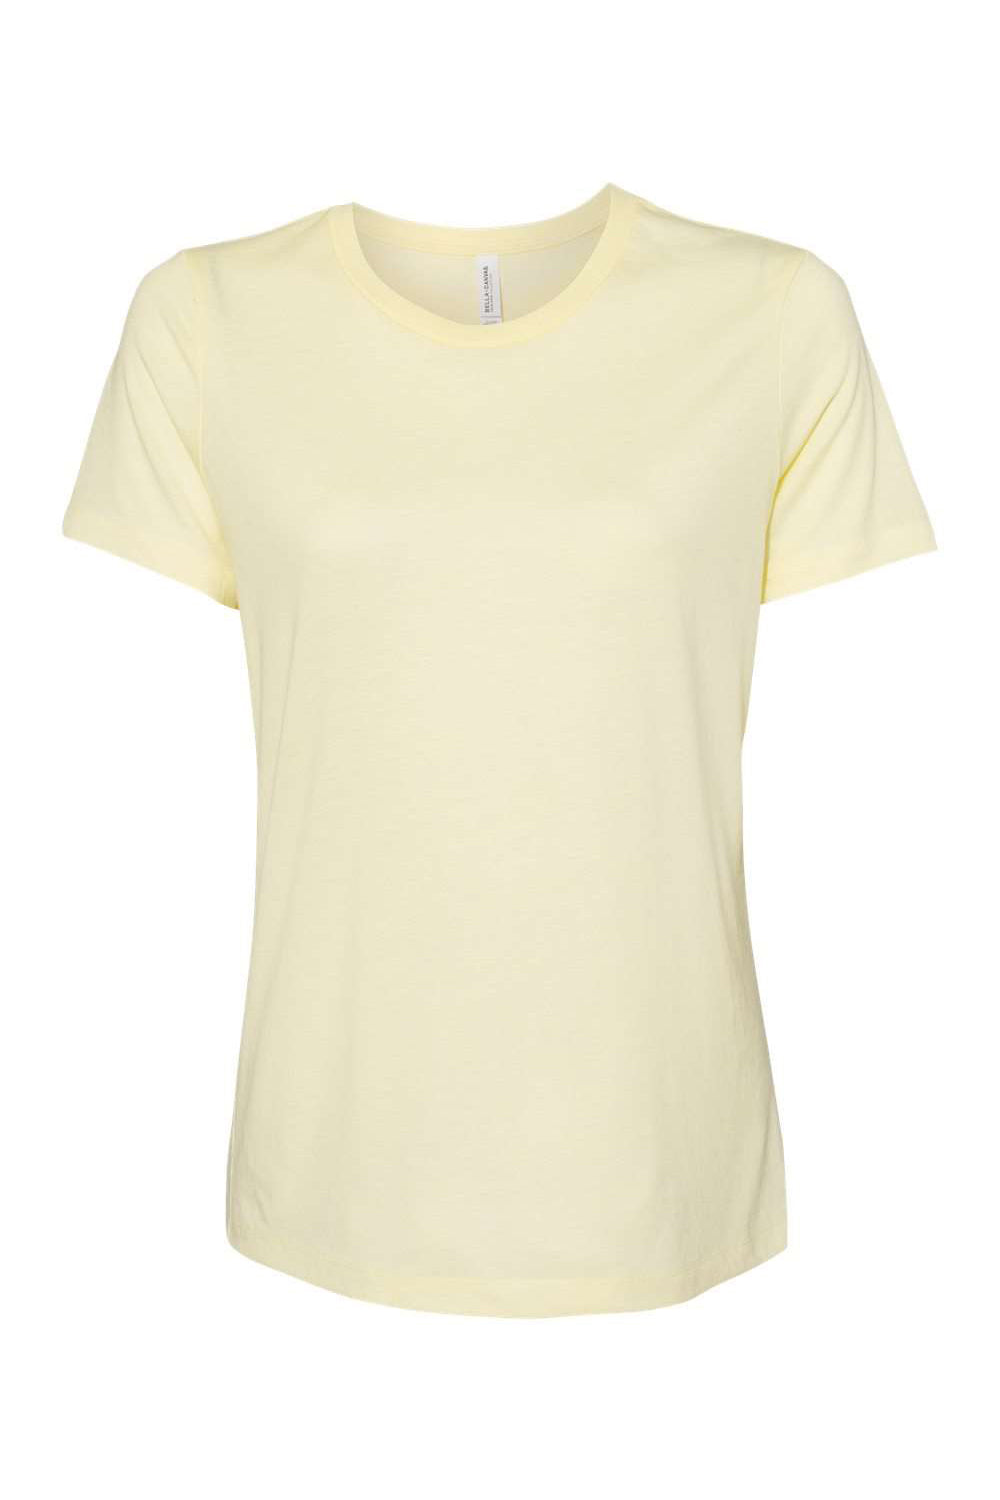 Bella + Canvas BC6413 Womens Short Sleeve Crewneck T-Shirt Pale Yellow Flat Front